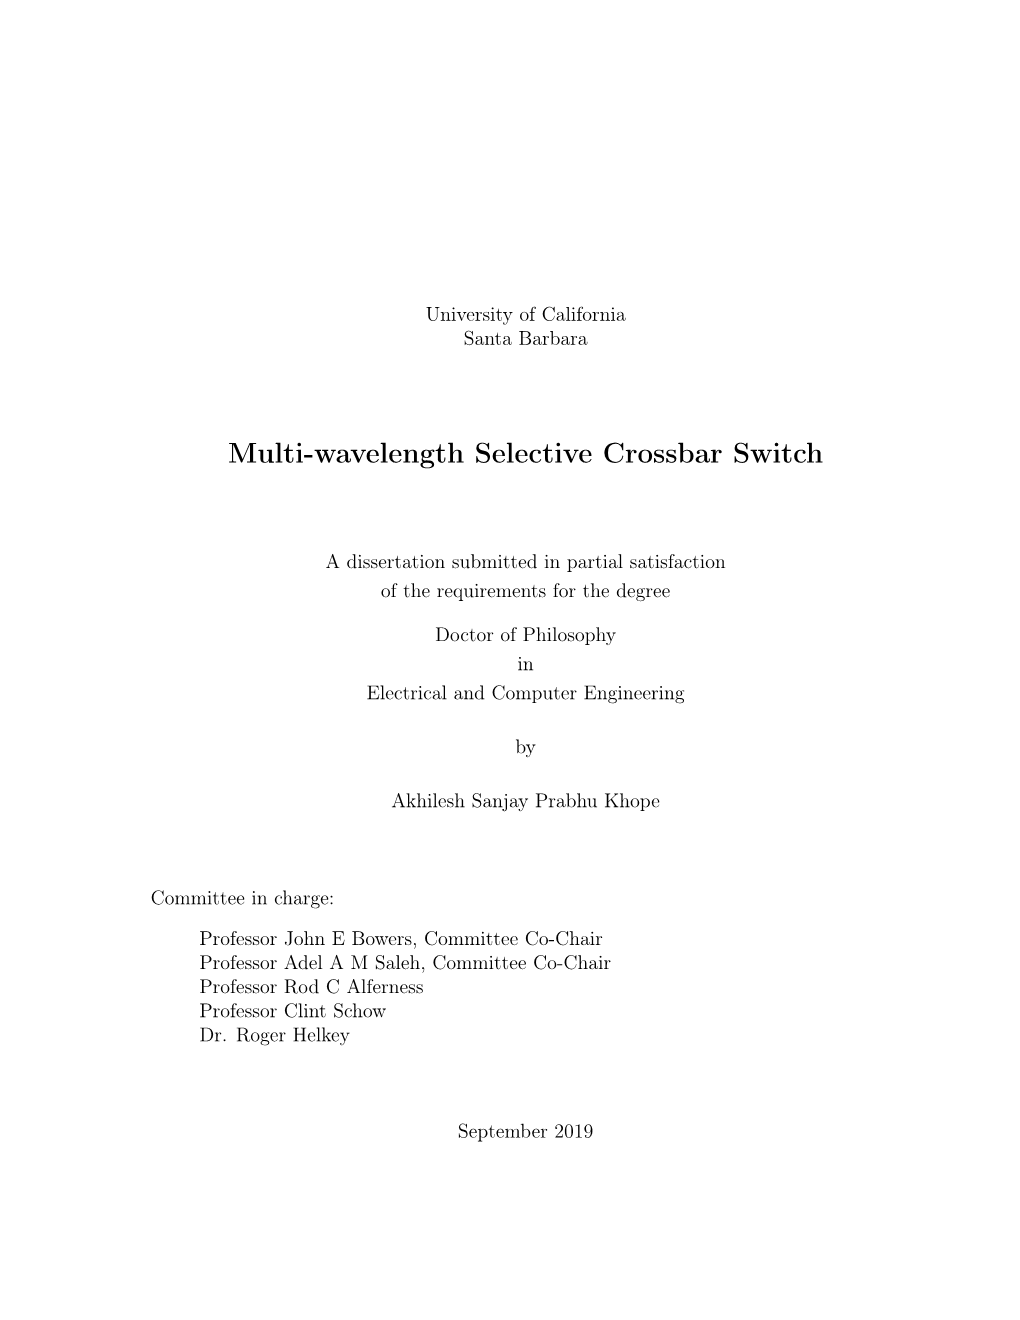 Dissertation Multi-Wavelength Selective Crossbar Switch